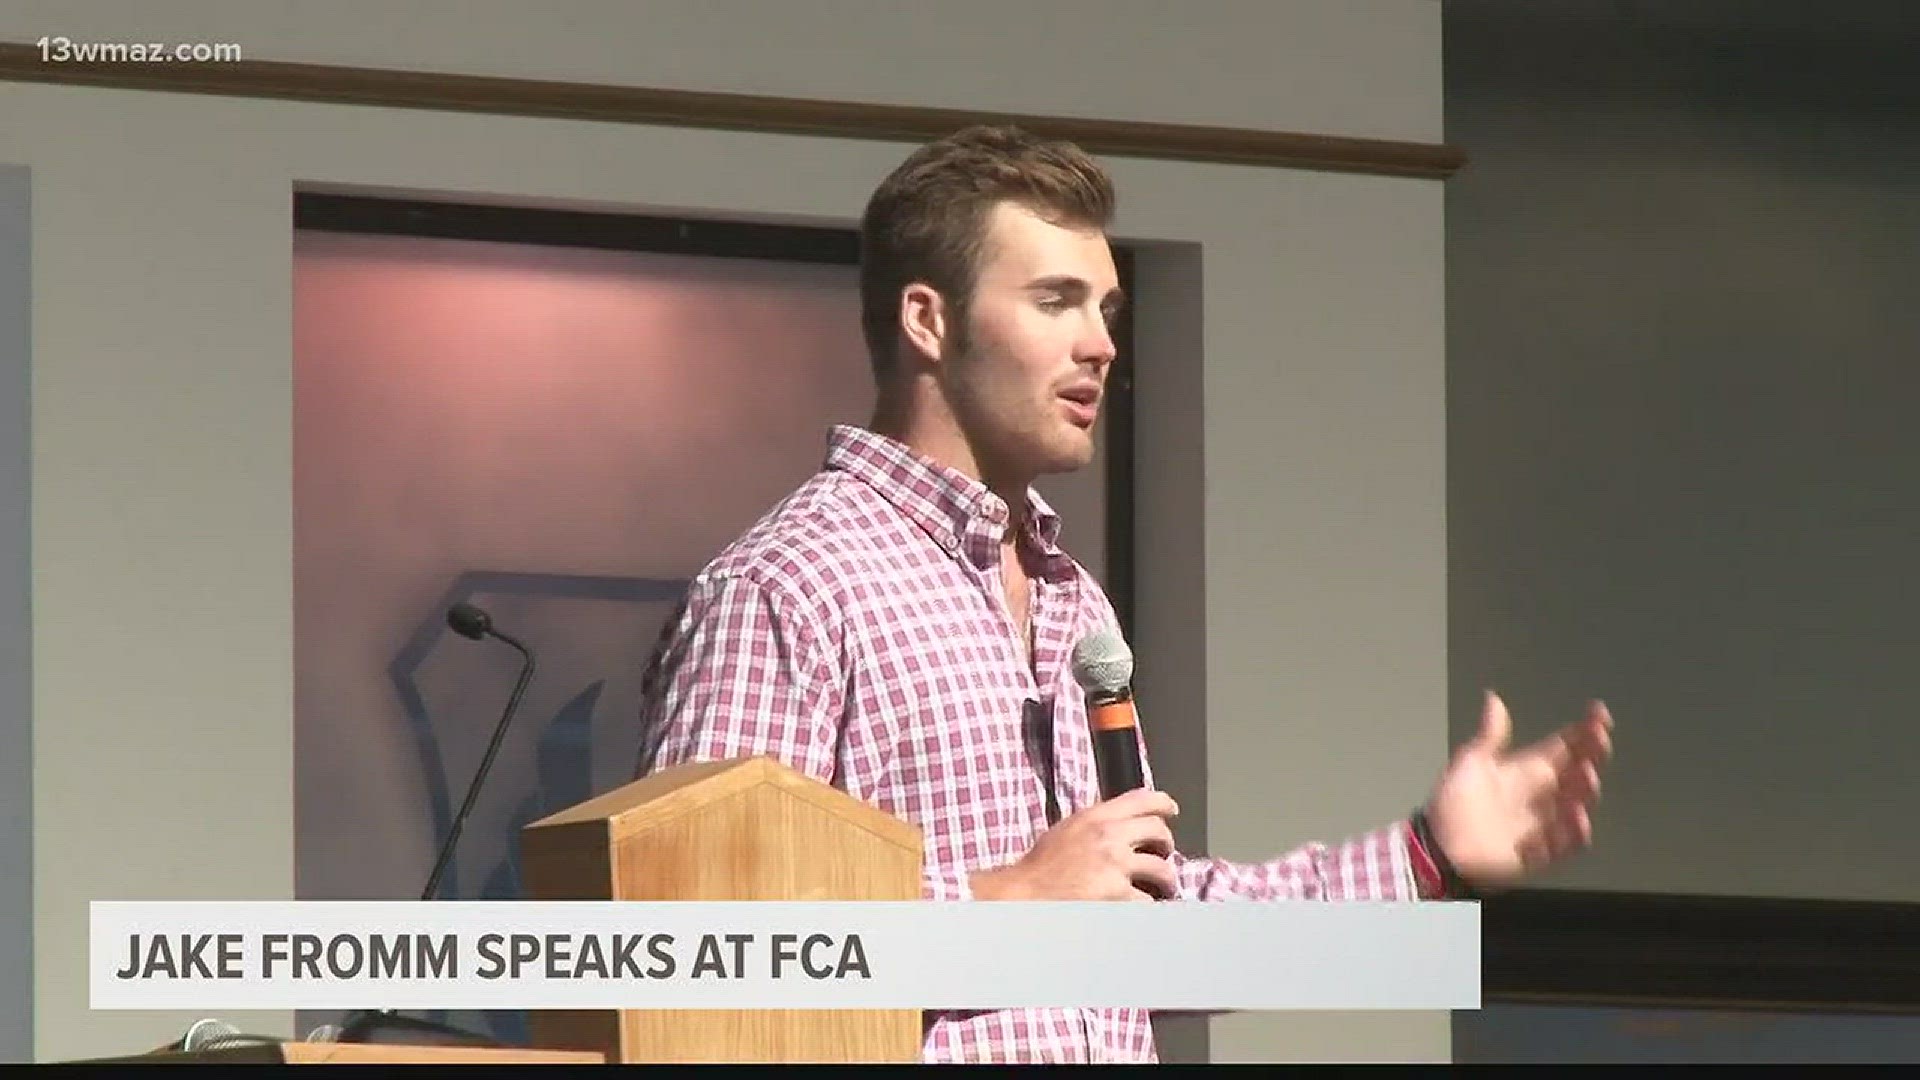 Jake Fromm speaks at FCA